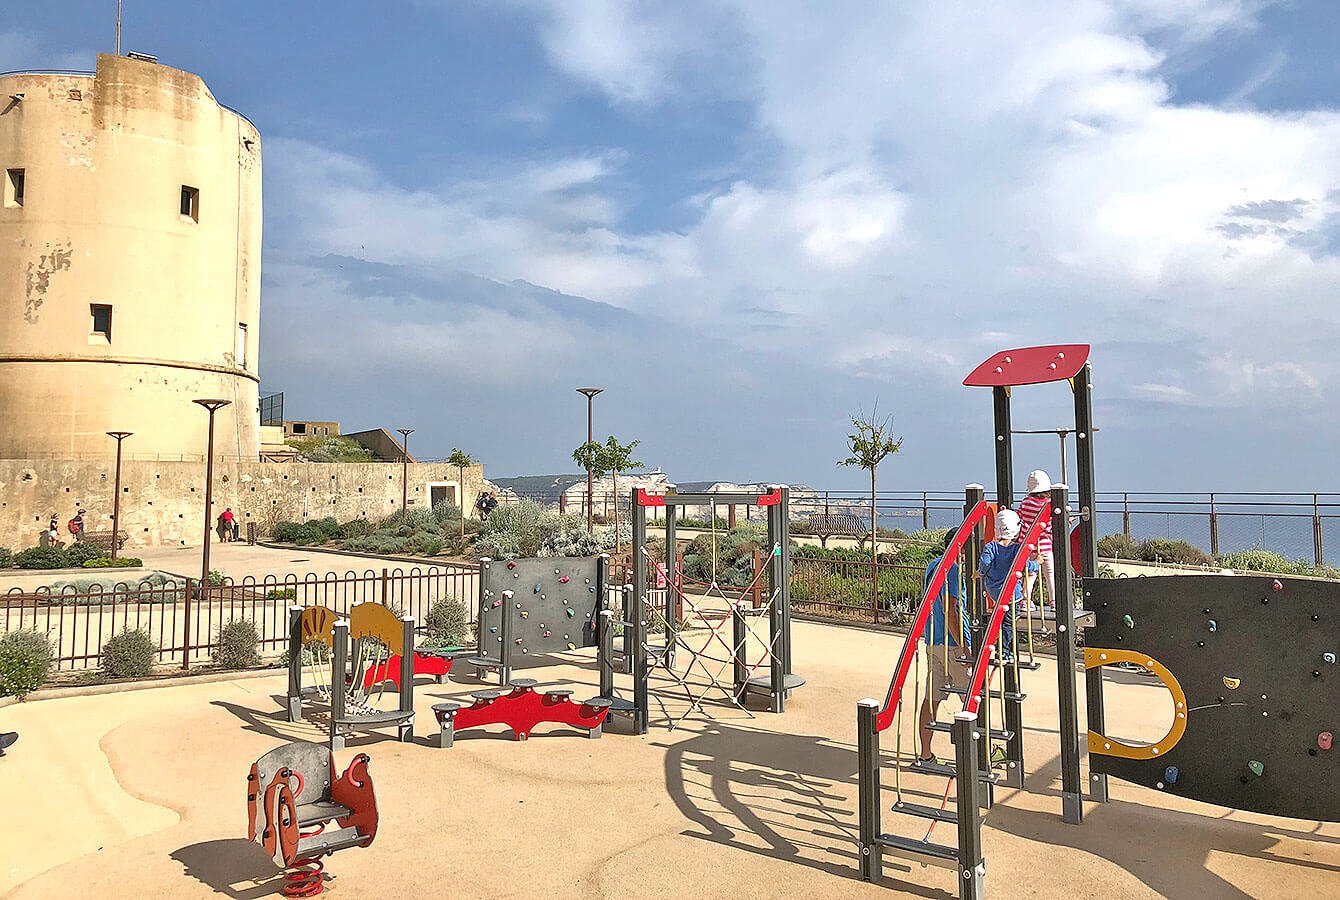 Bonifacio playground by the school - Corsica - France